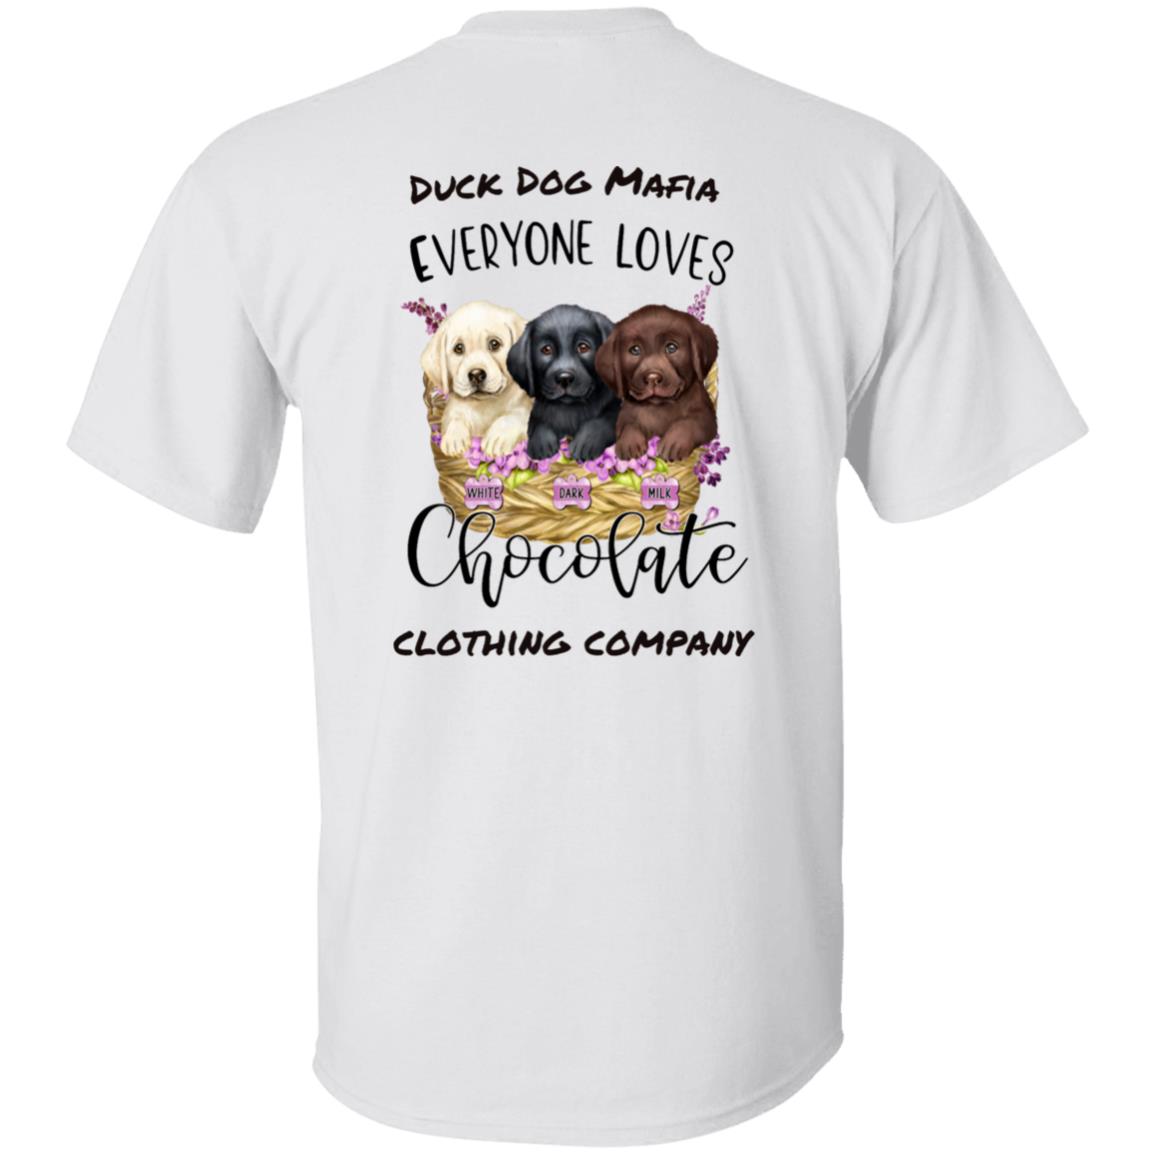 EVERYONE LOVES CHOCOLATE